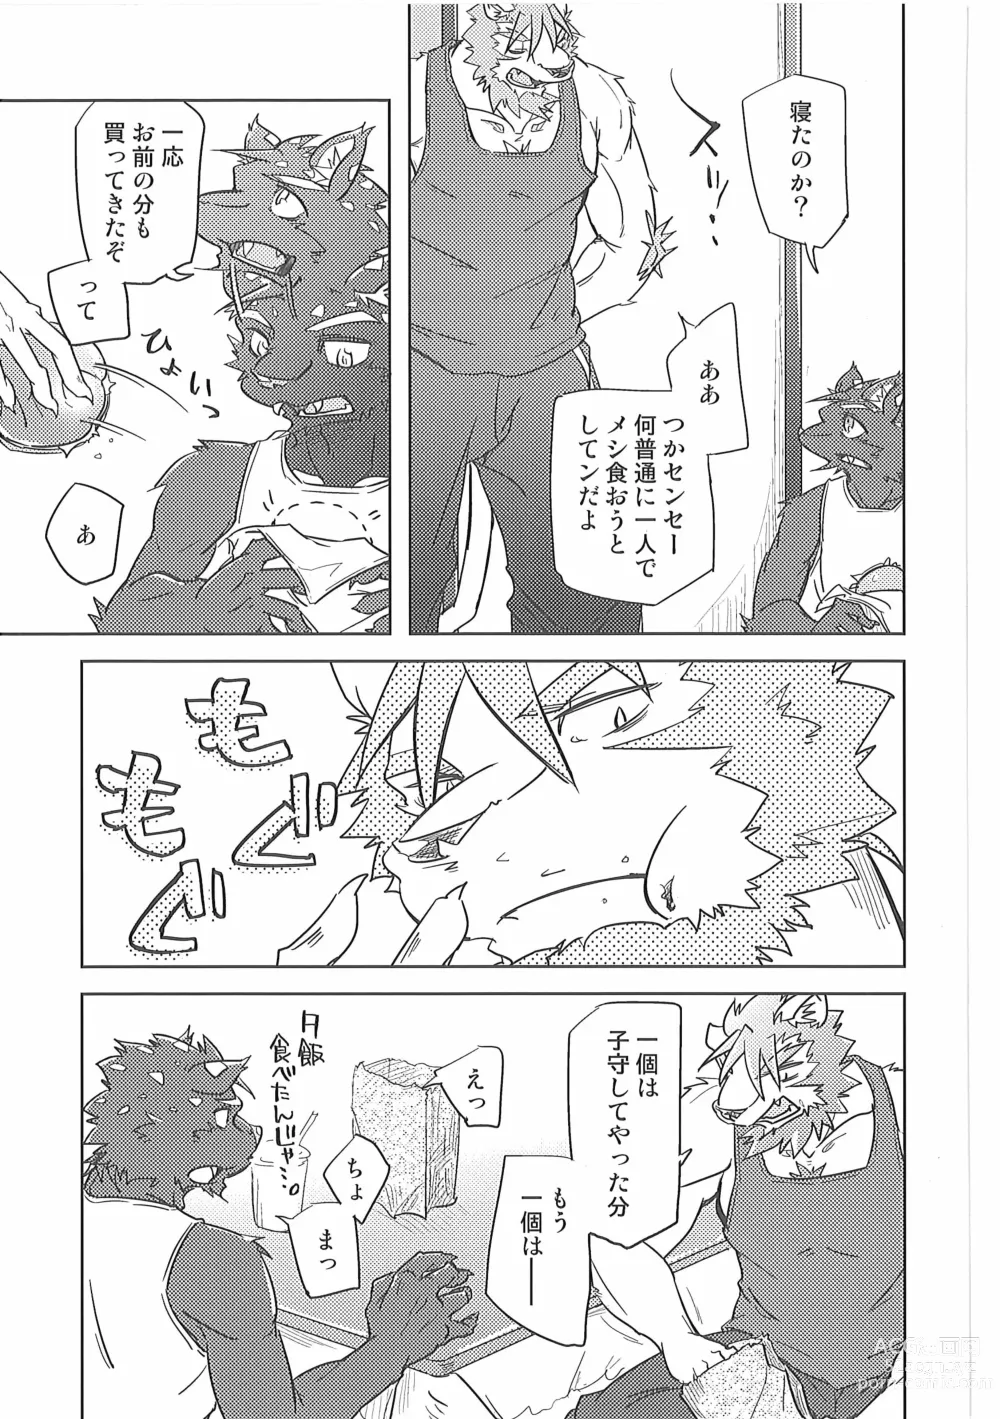 Page 12 of doujinshi Crazy Waltz